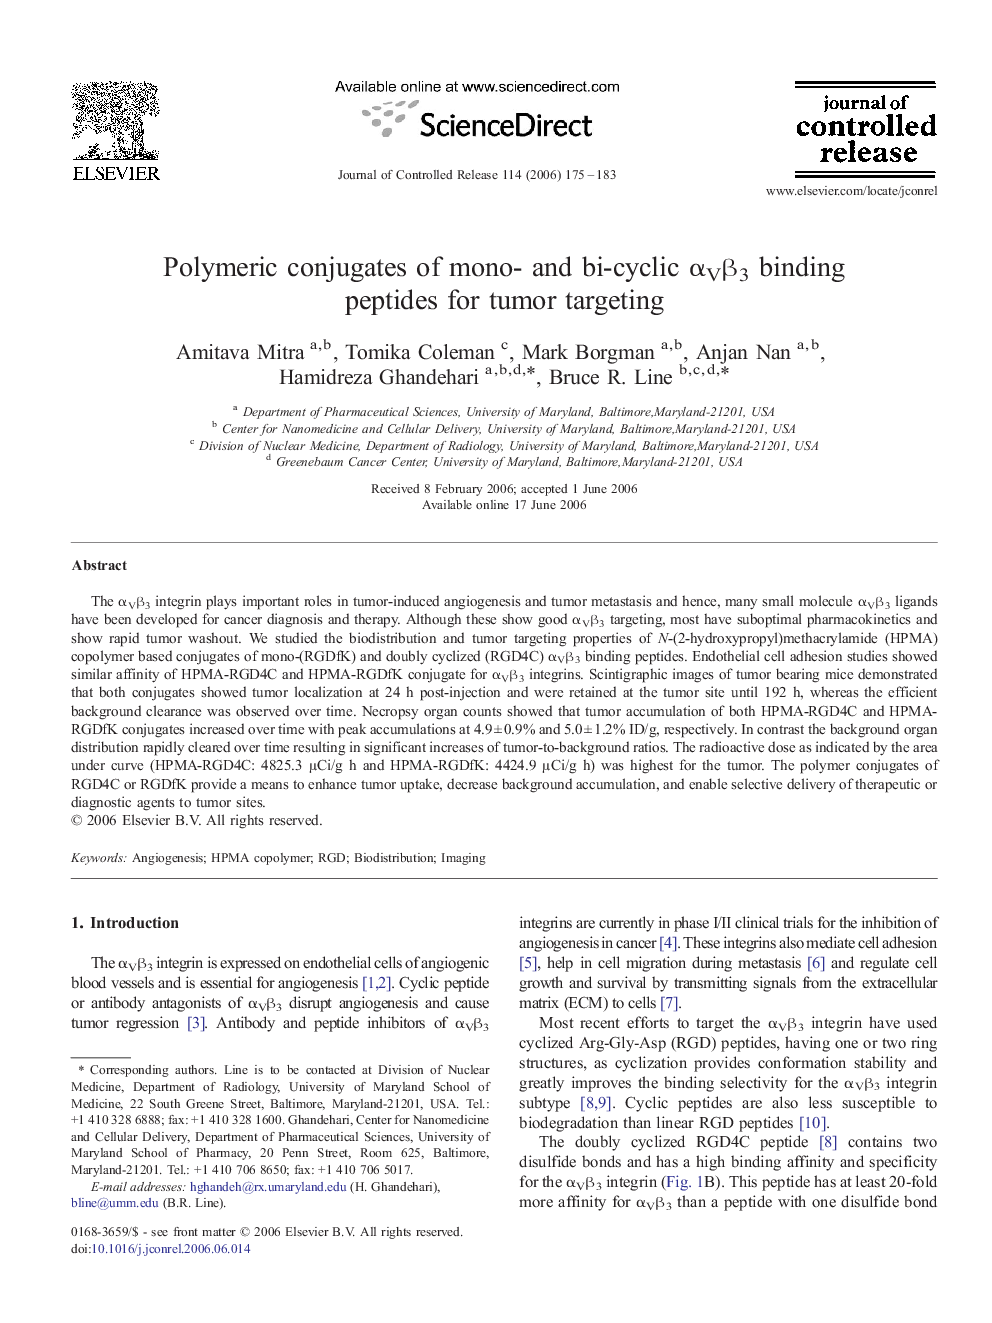 Polymeric conjugates of mono- and bi-cyclic αVβ3 binding peptides for tumor targeting